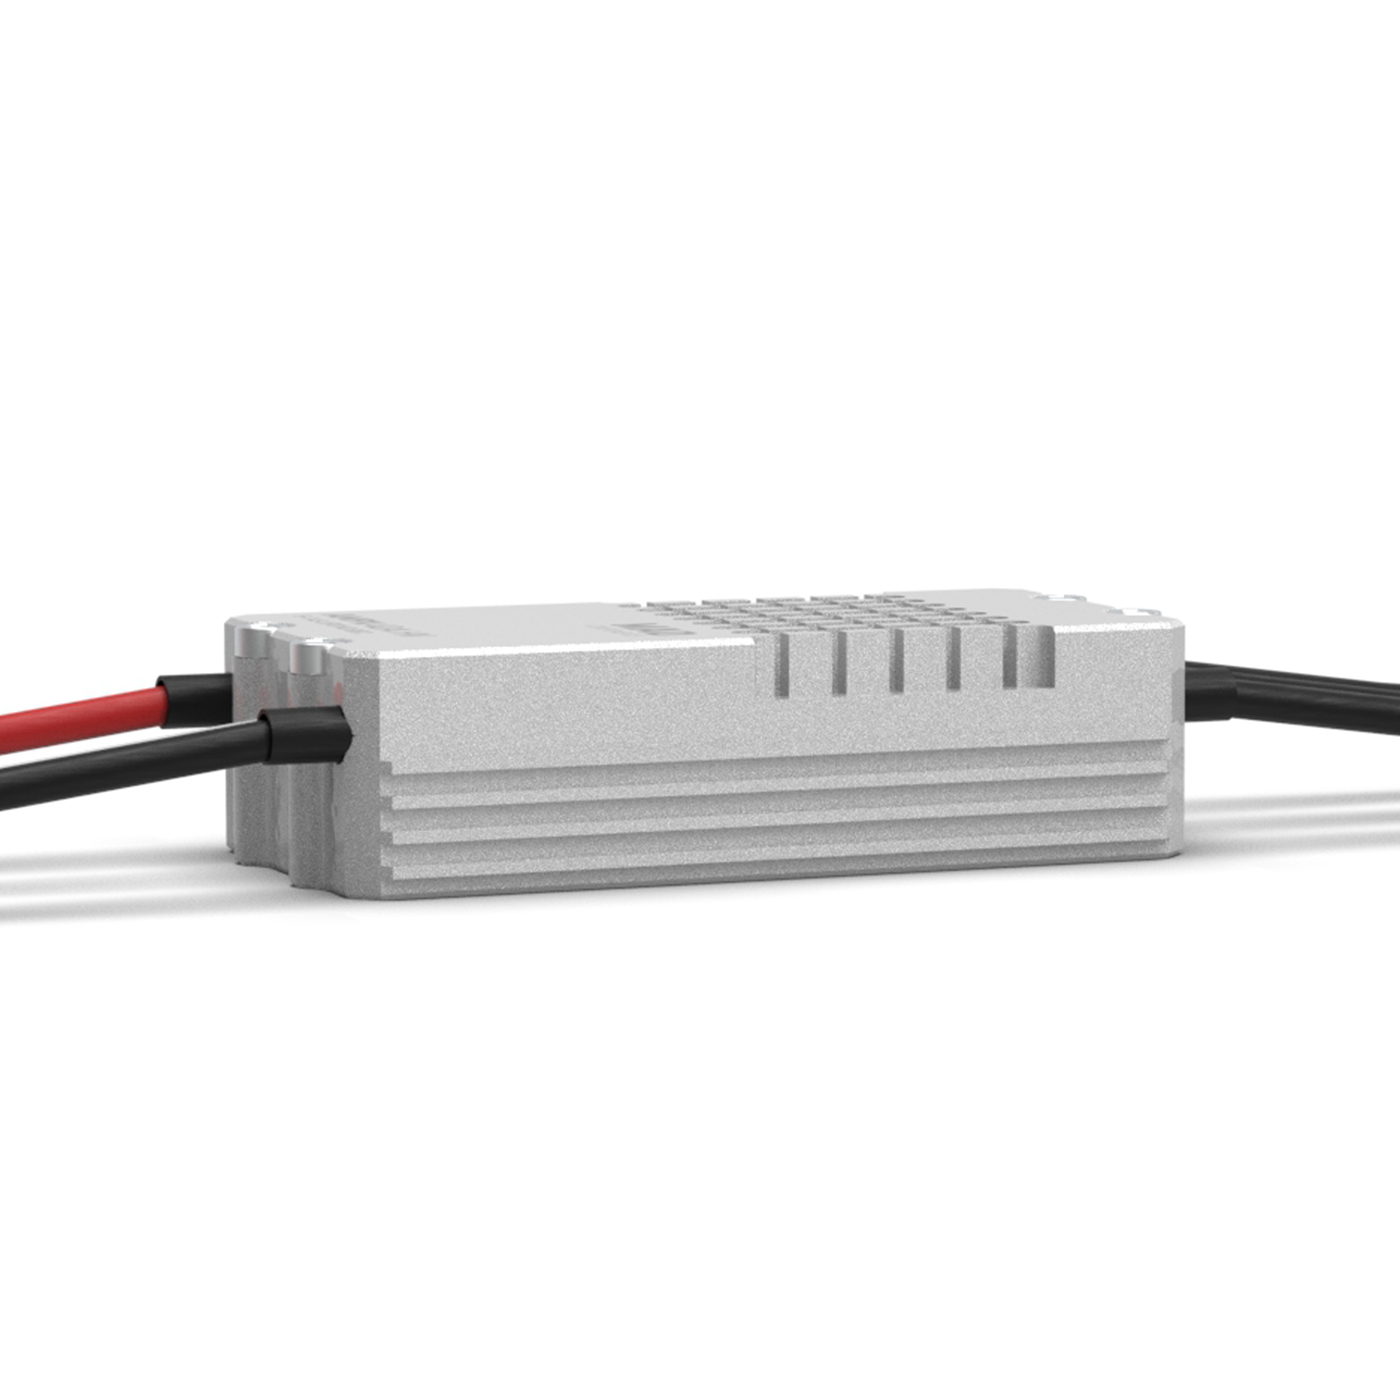 AMPX 40A (5-14S) ESC Regulator HV Waterproof  High voltage for long-range fright time professional drone VTOL